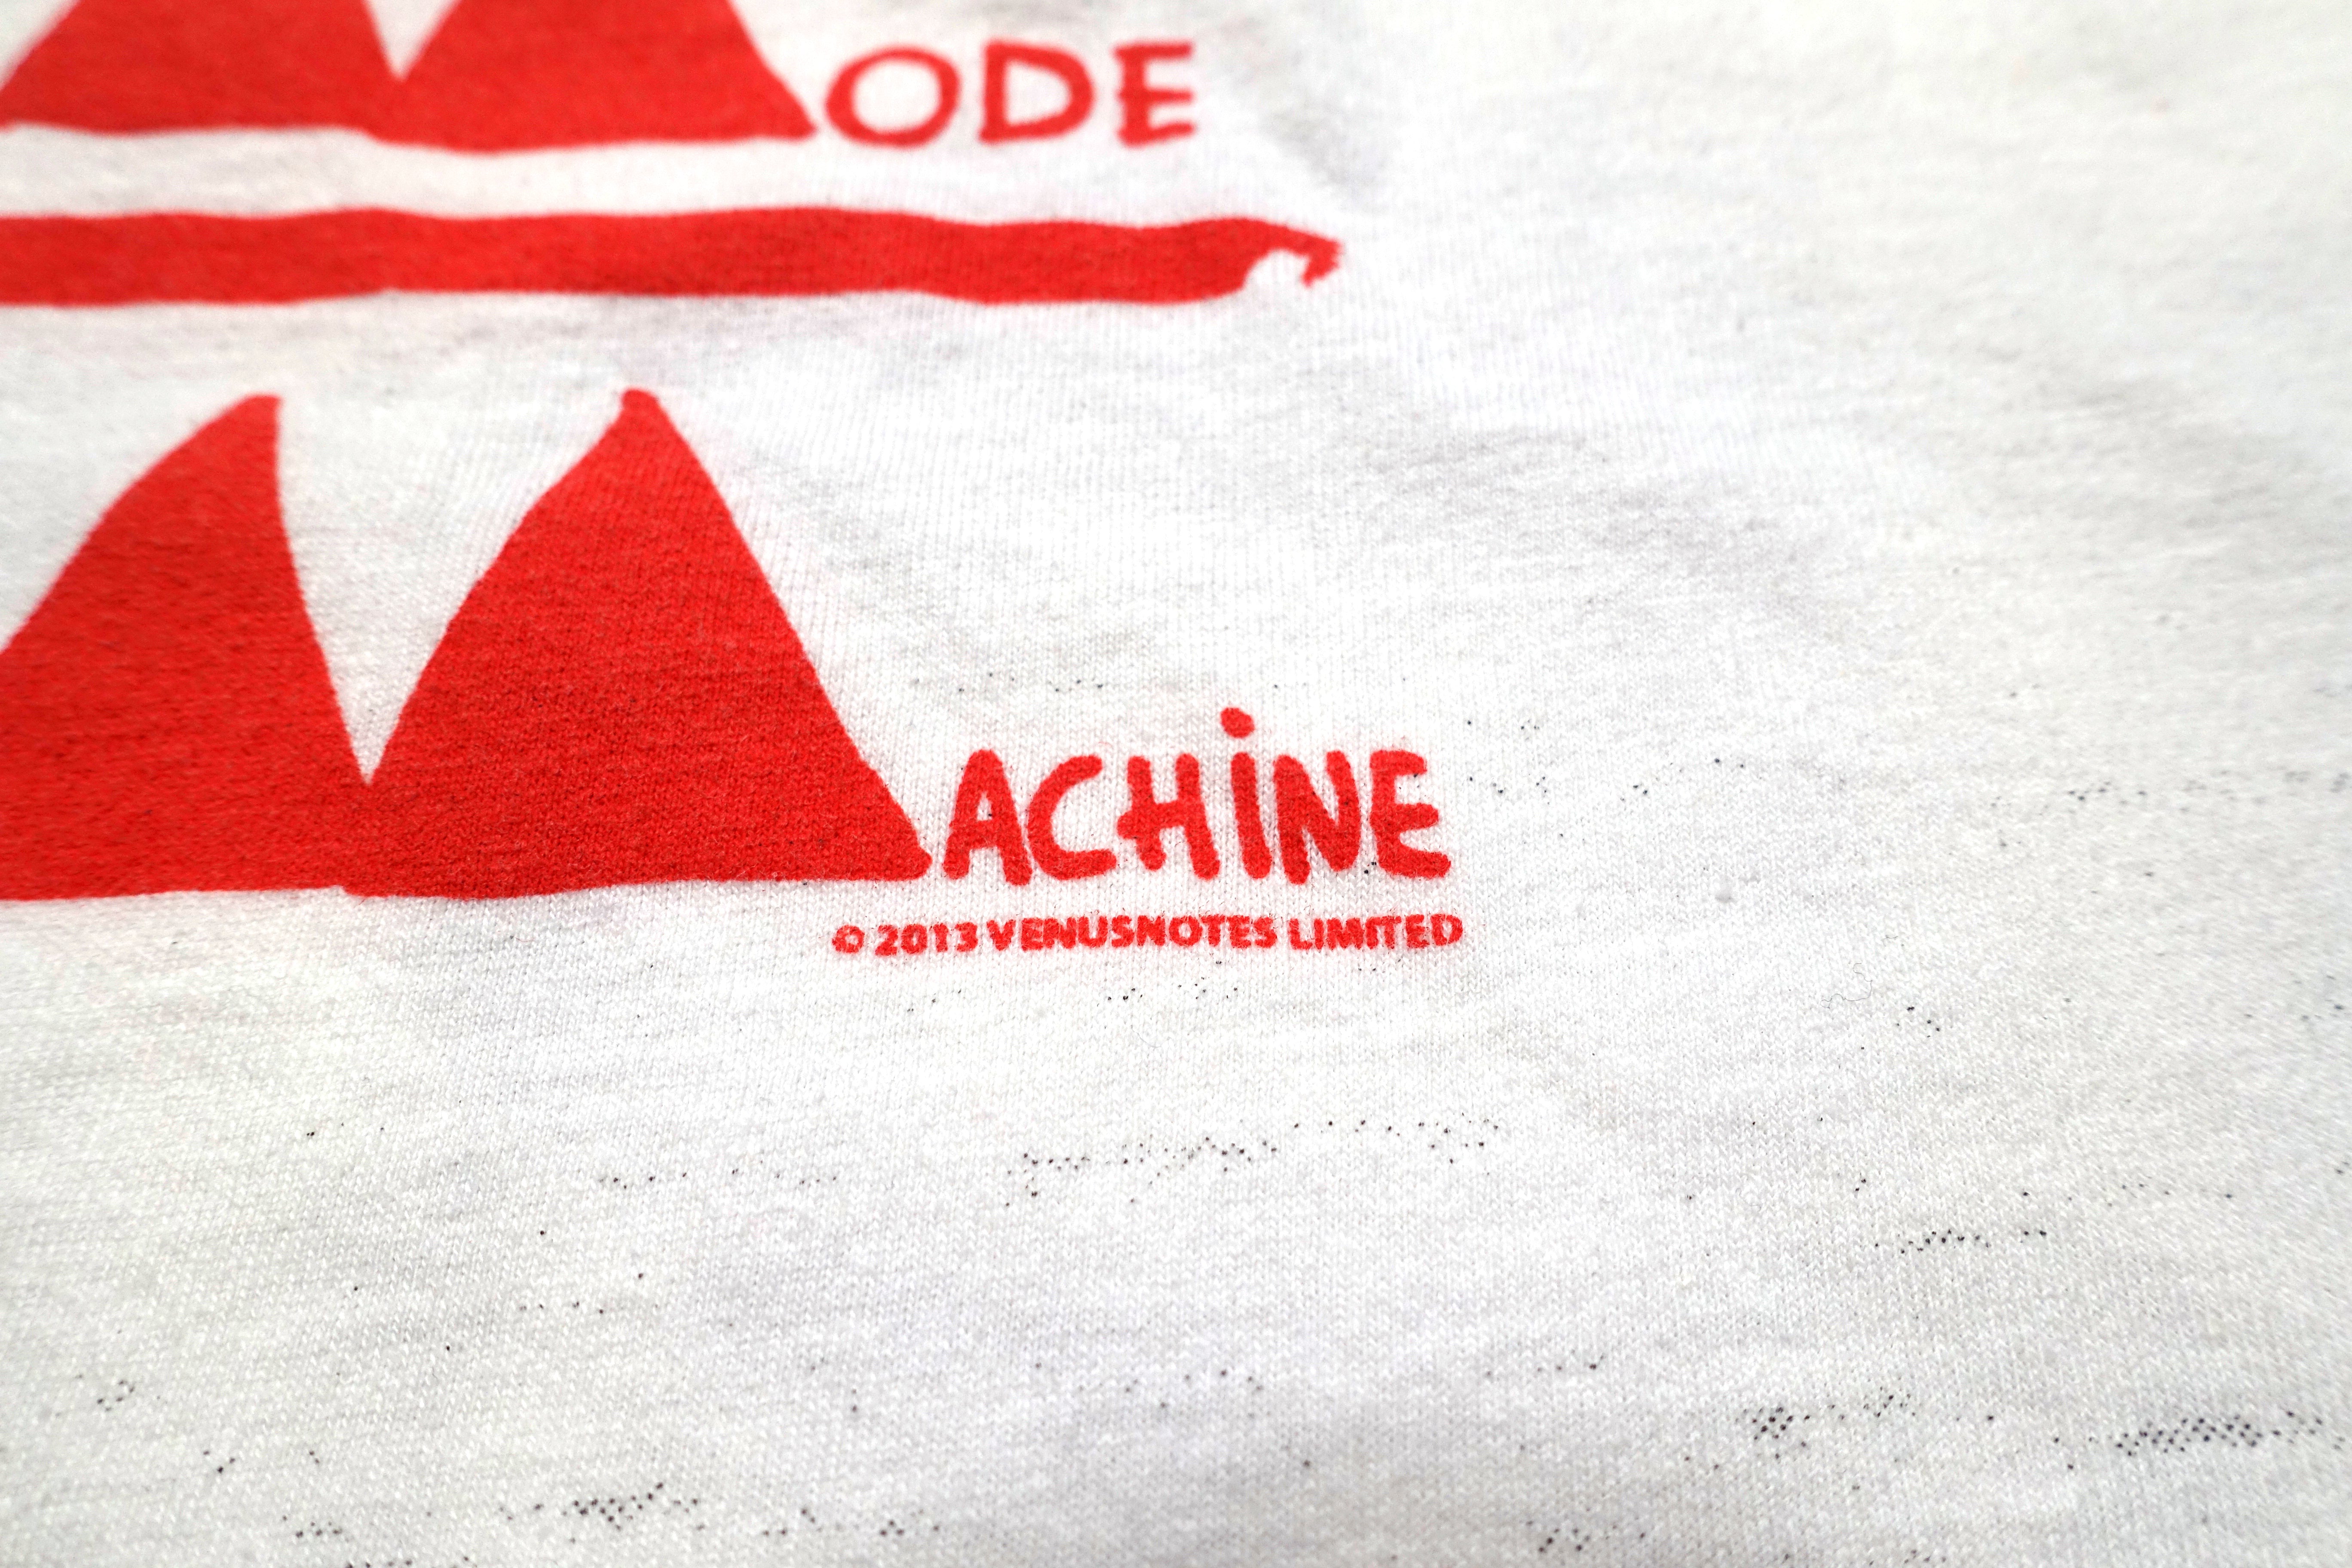 Depeche Mode – Delta Machine 2013 North American Tour Shirt Size XL